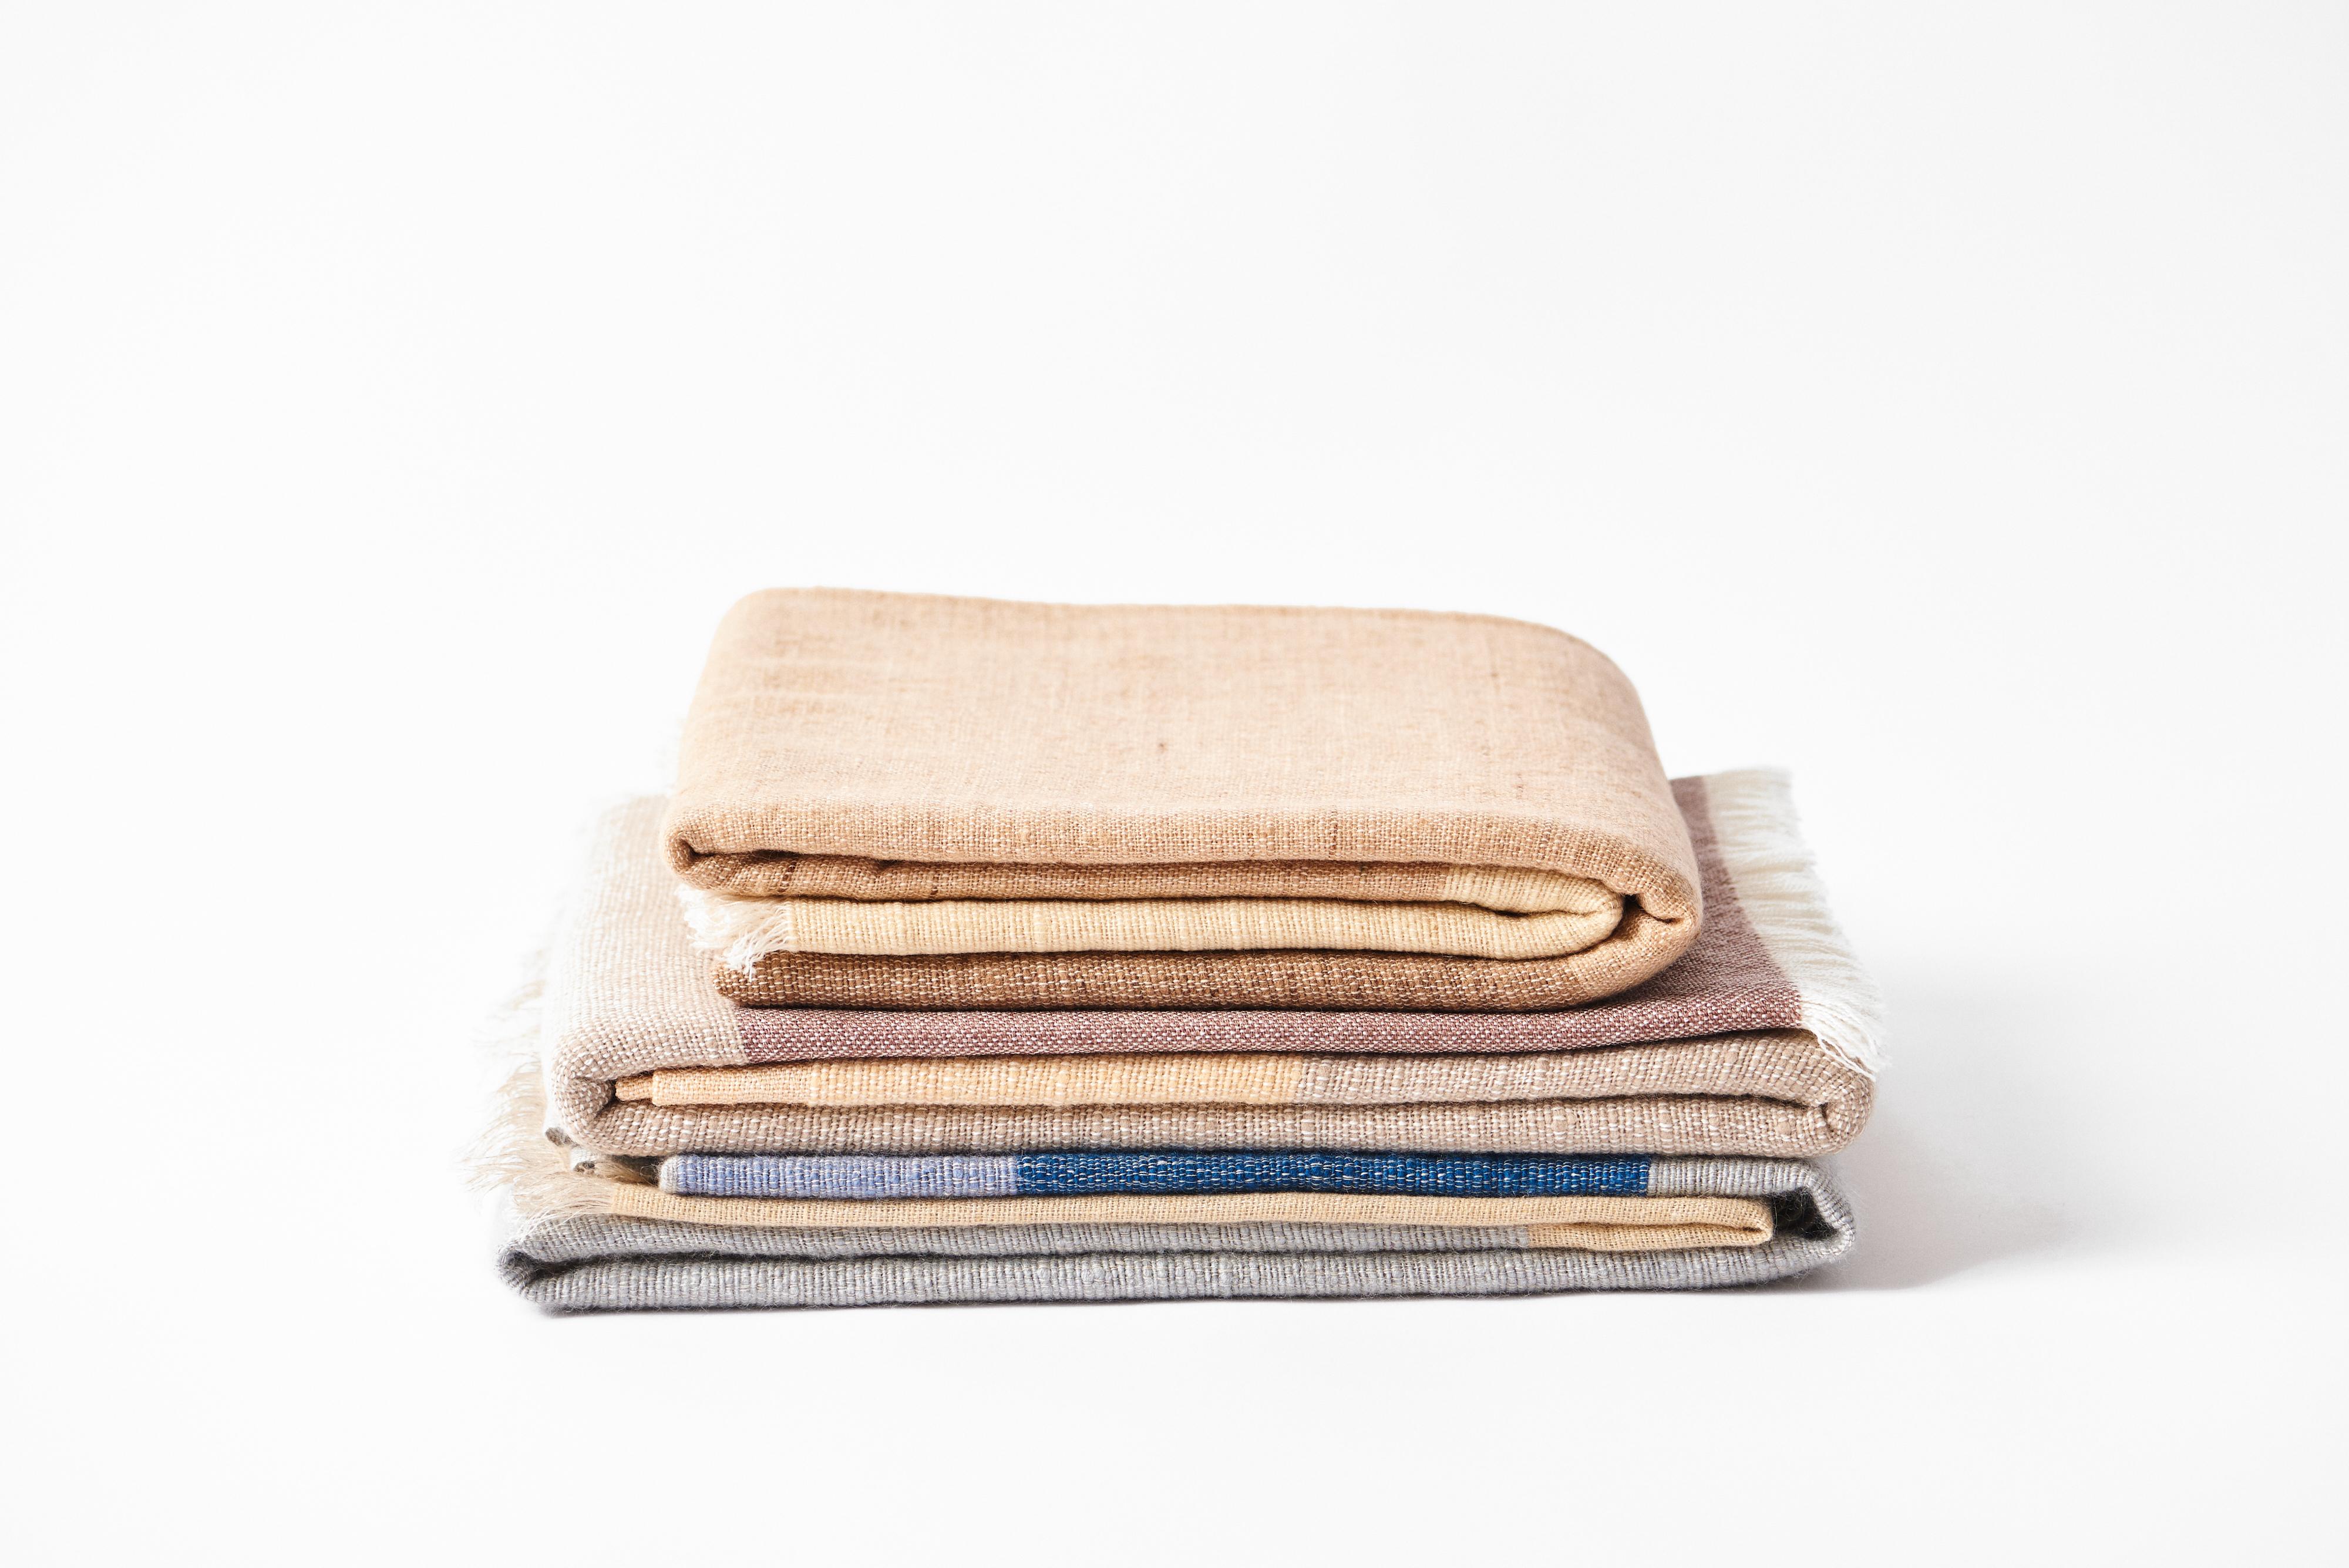 Ceru Handloom Merino Throw / Blanket in Neutral Shades of Cream & Serene Blue For Sale 8